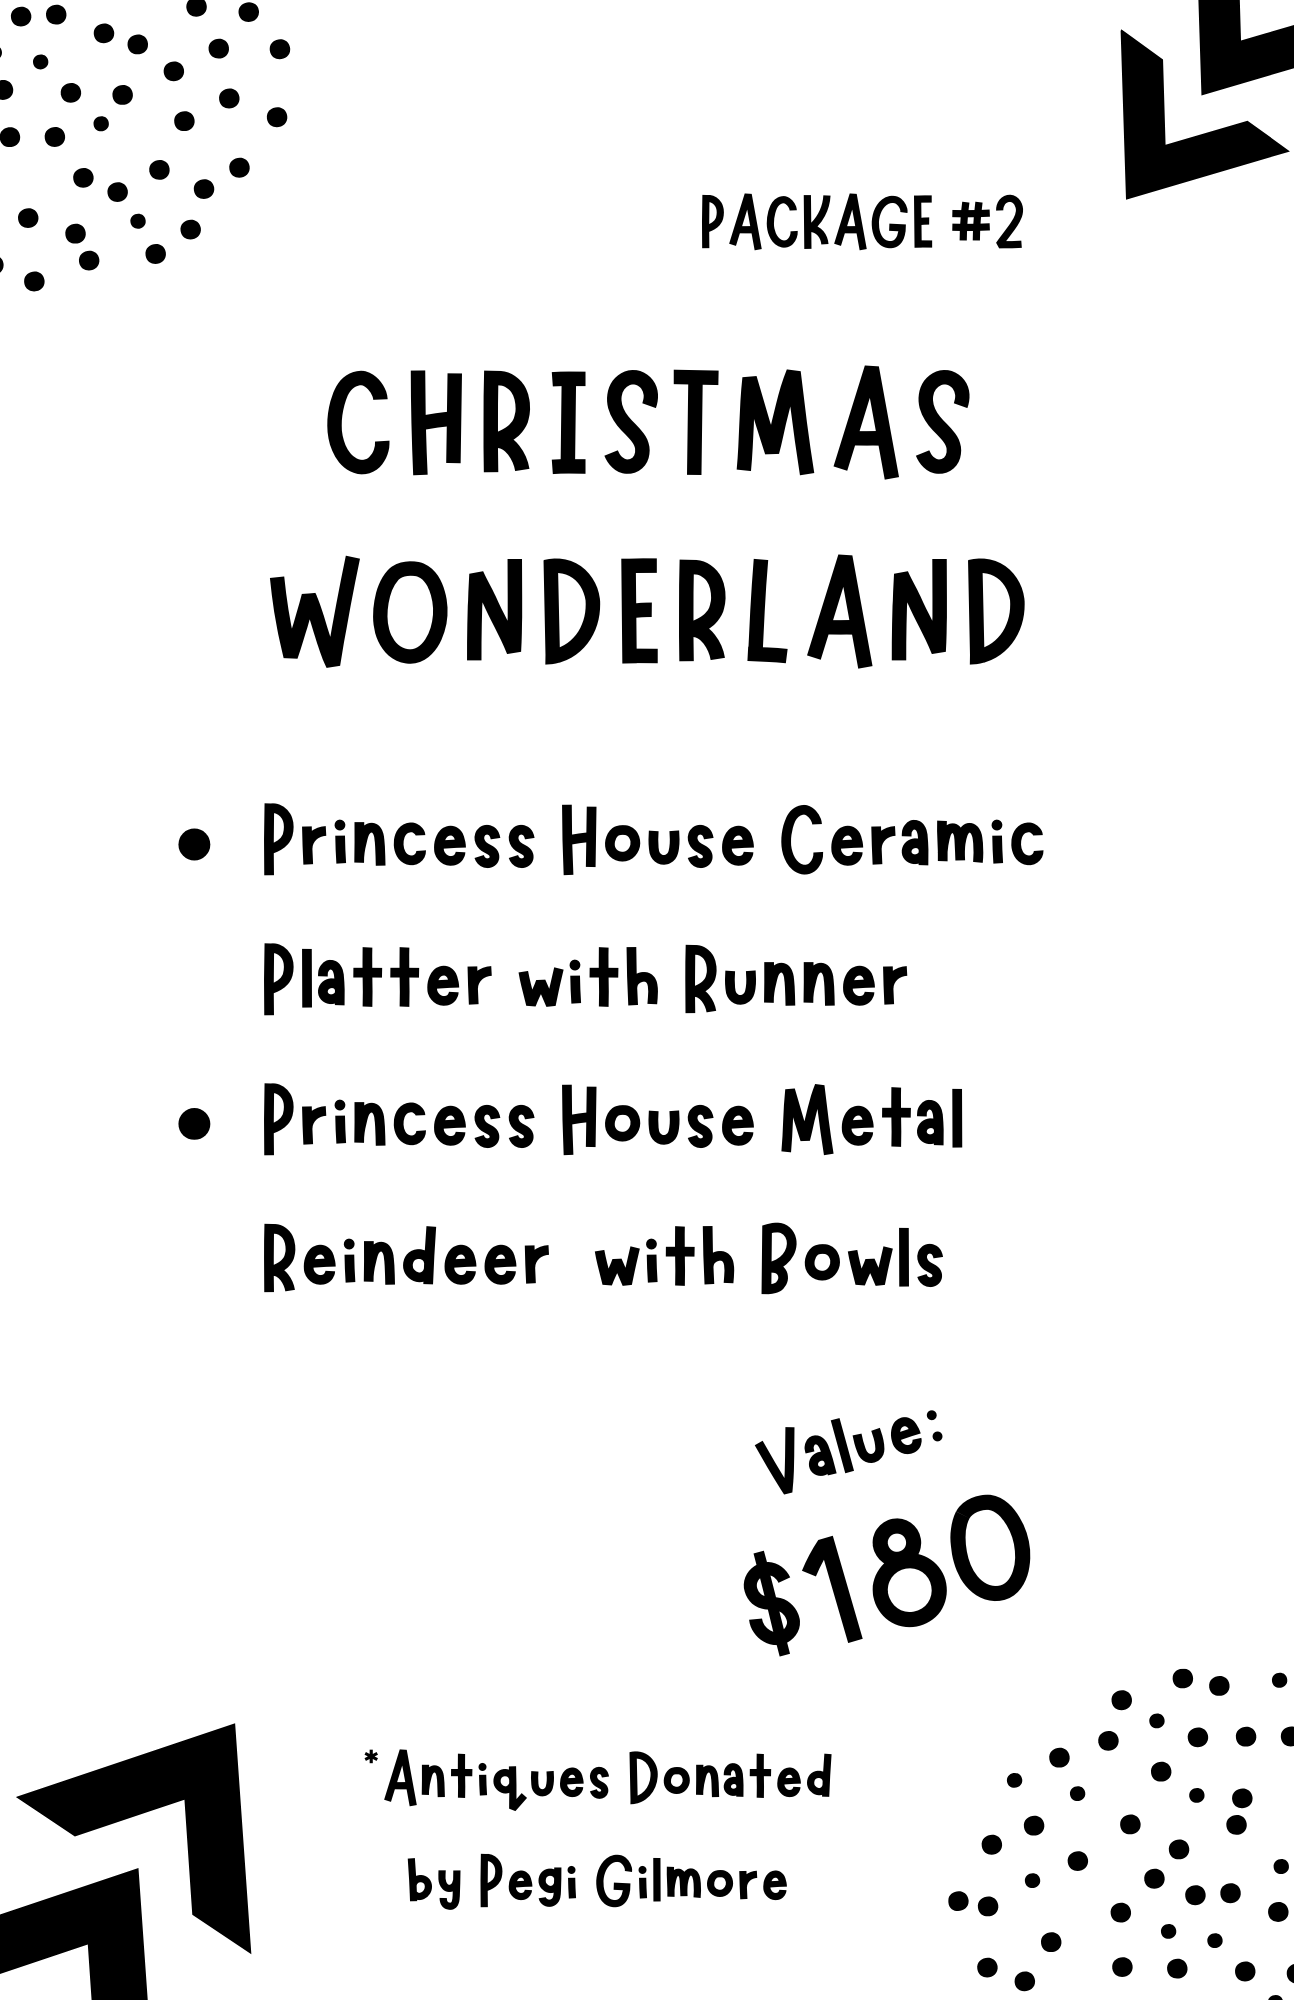 Auction Item #2  Christmas Wonderland